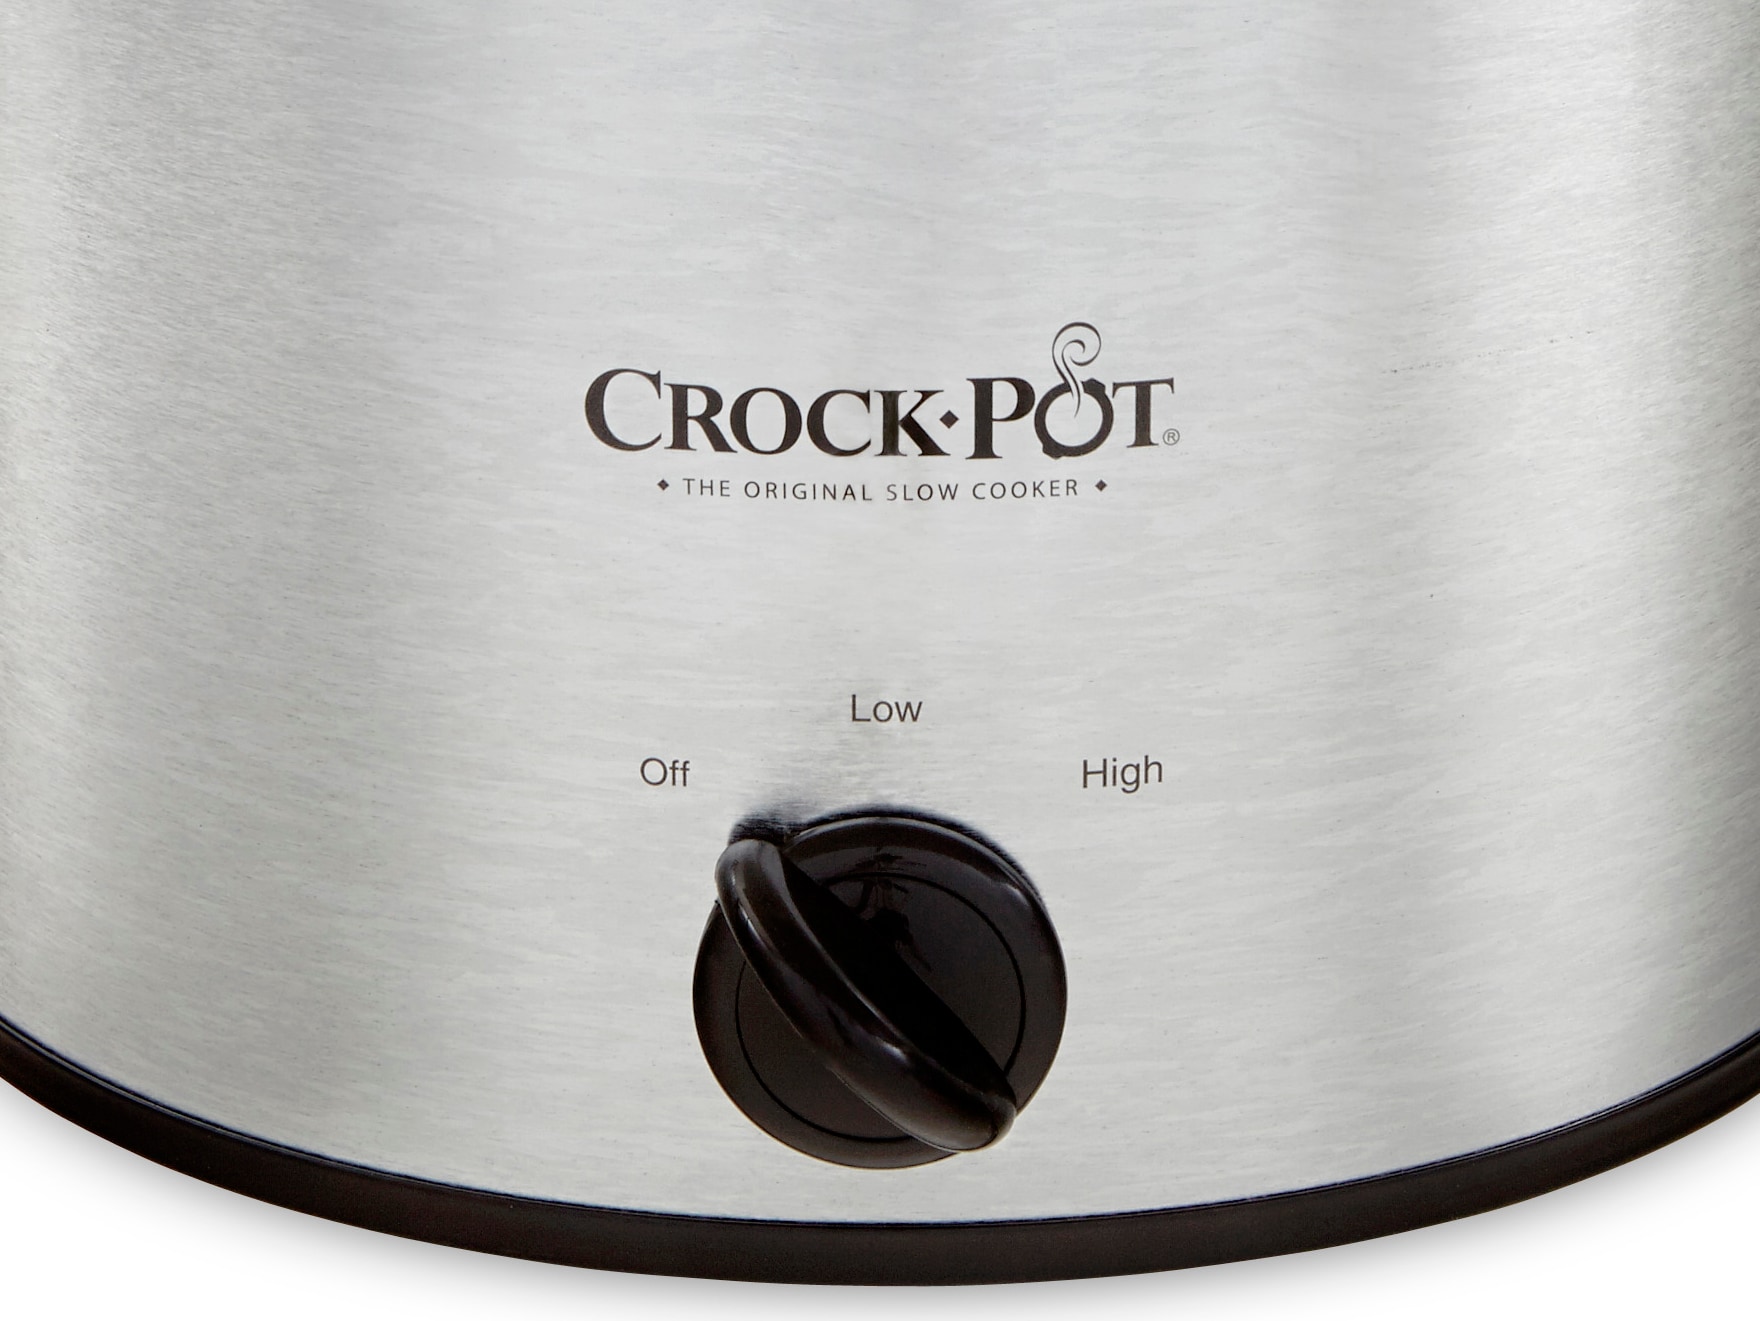 Crock-pot 3040-vg 4-quart Round Manual Slow Cooker